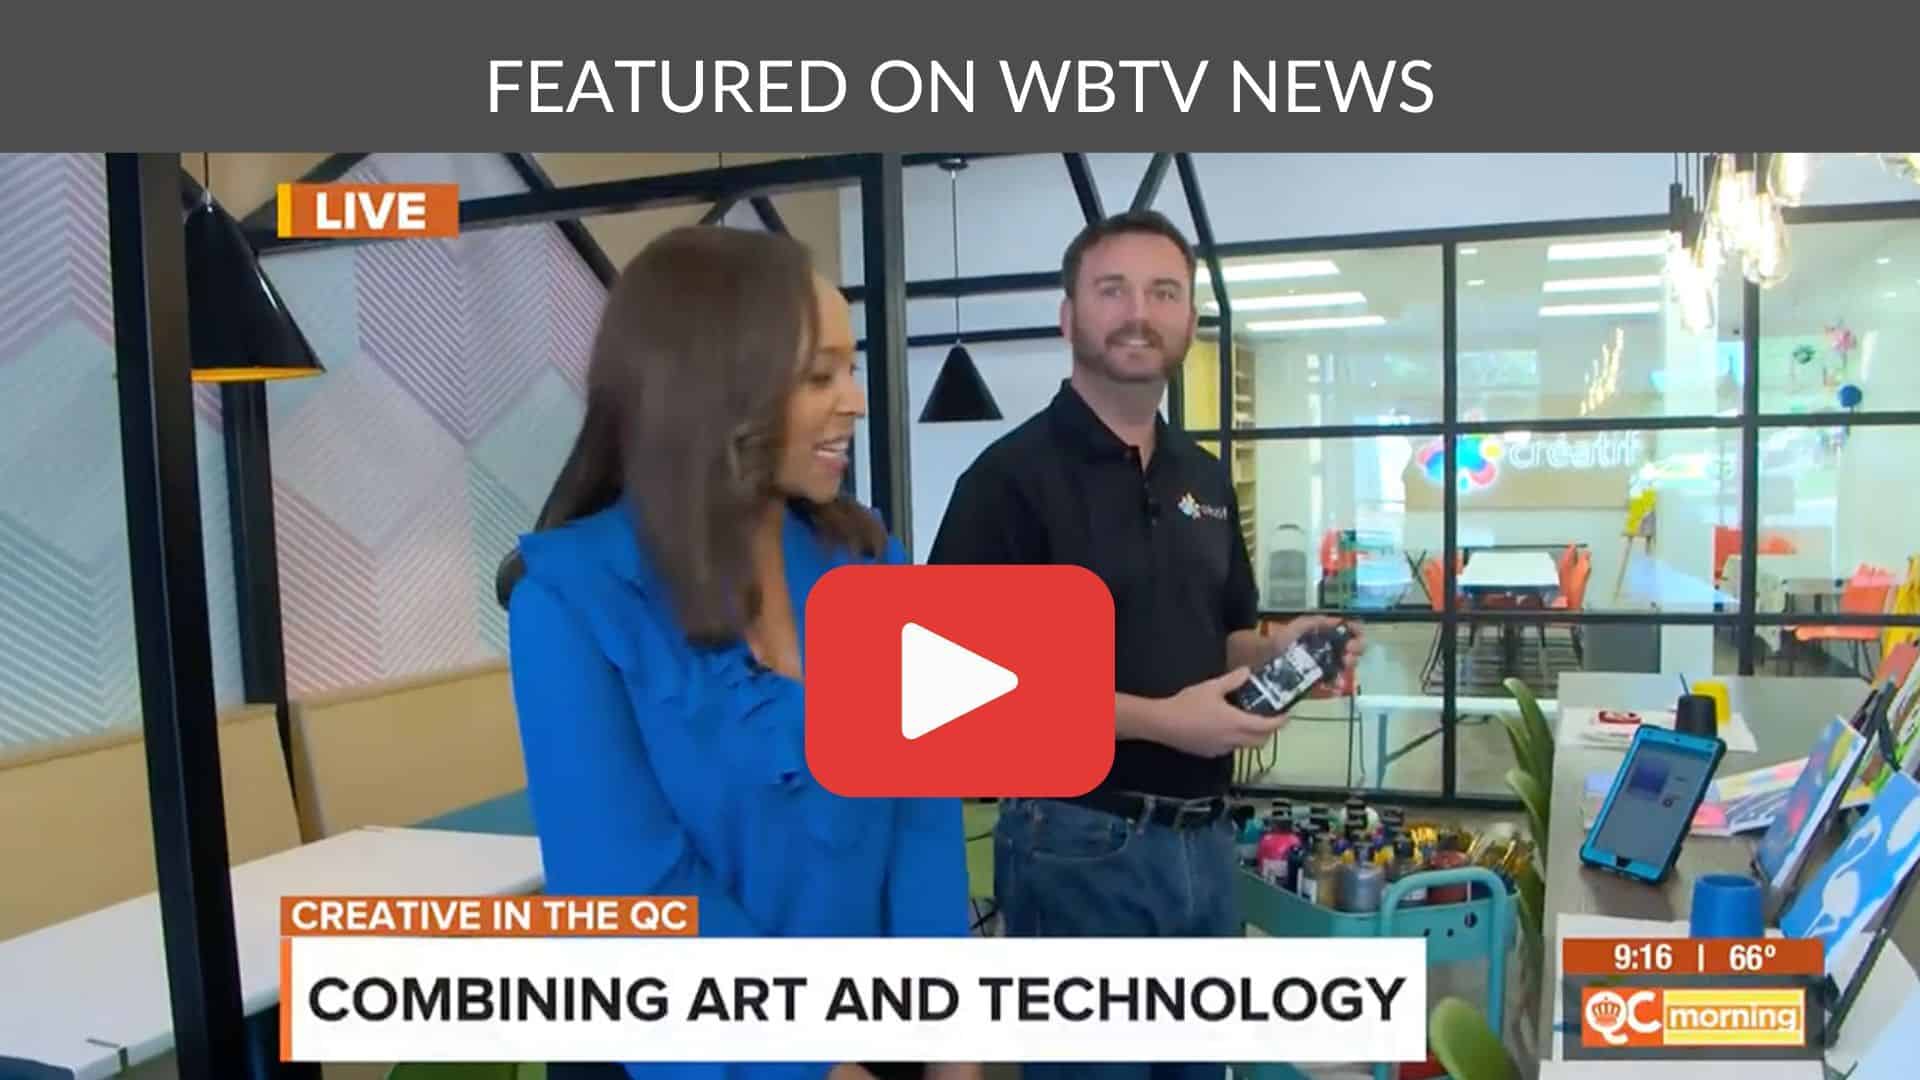 Creatif - Featured on WBTV News